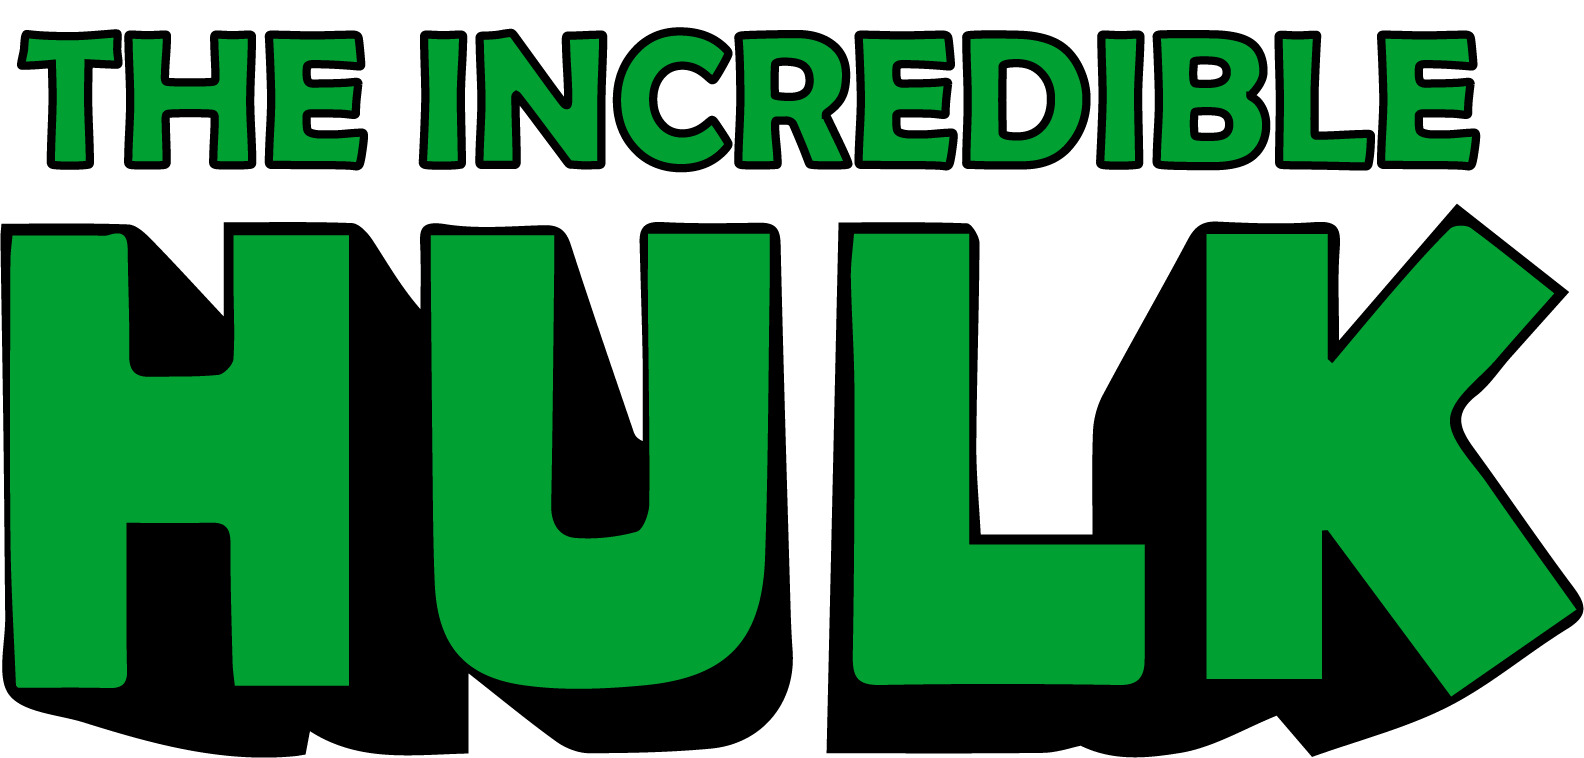 Hulk Logo - File:The Incredible Hulk logo.png - Wikimedia Commons